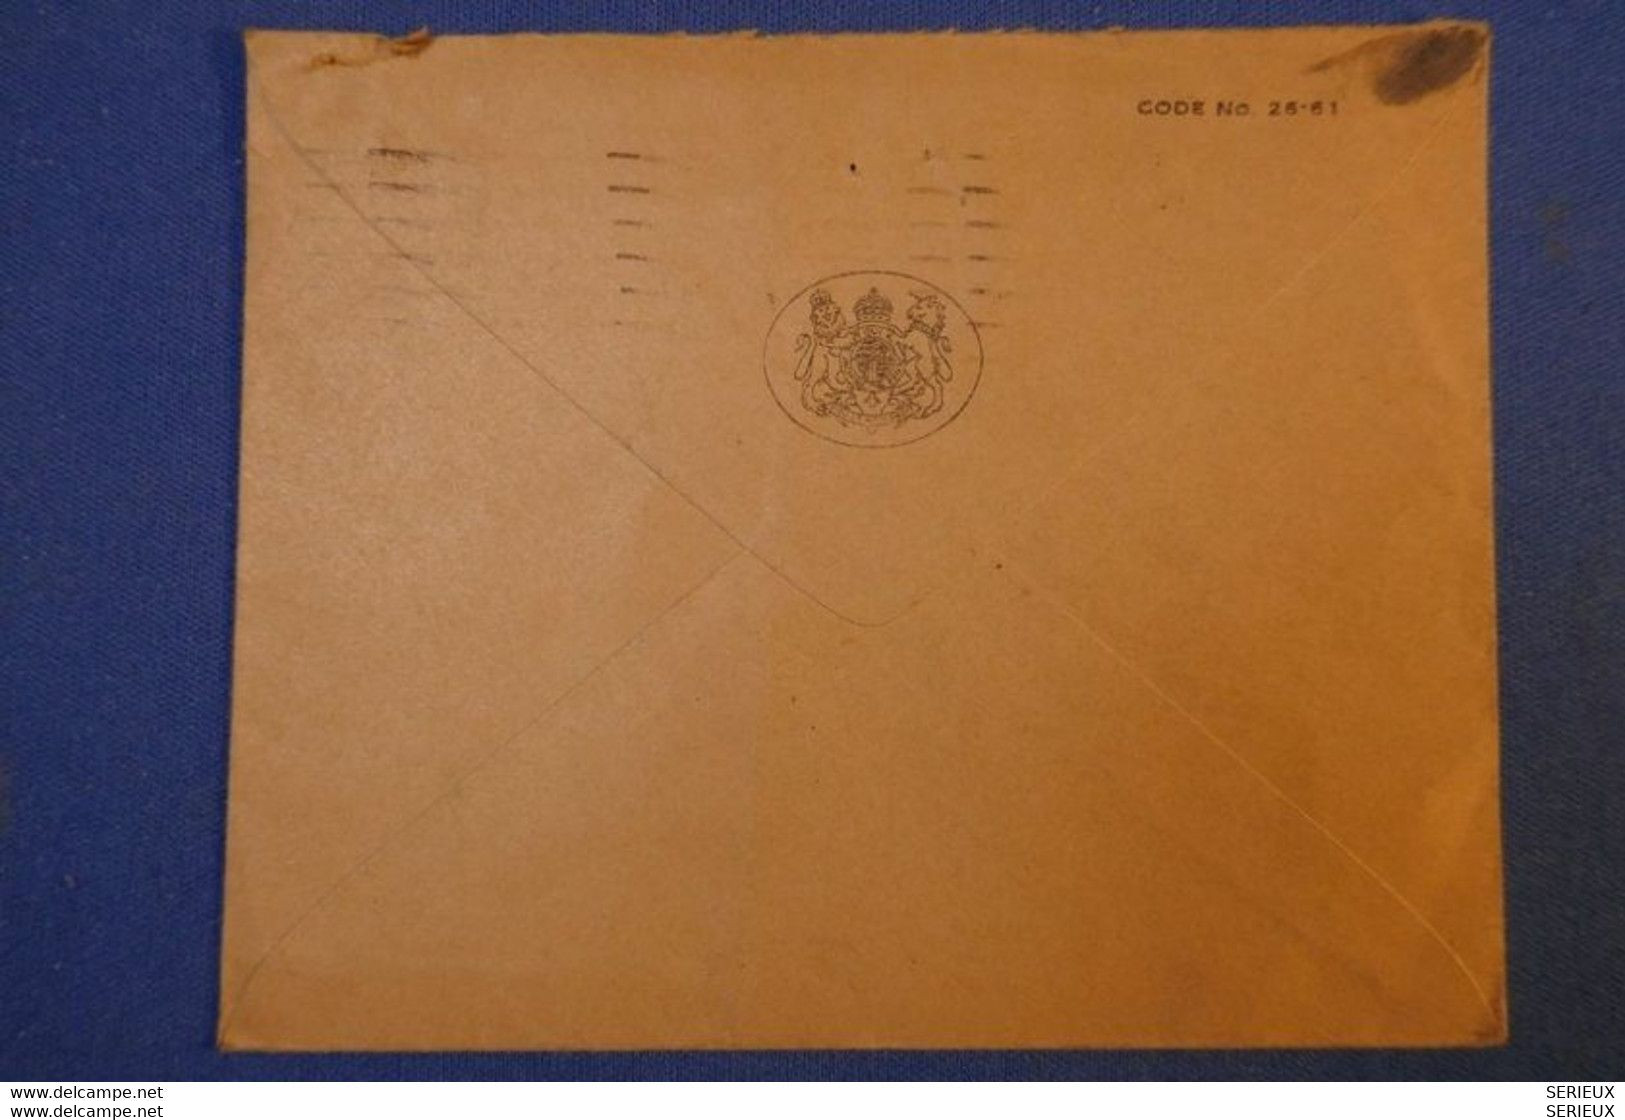 239 GRANDE BRETAGNE LETTRE 1951 DE LONDRES A PARIS R DE LA CONVENTION + TIMBRES PERFORATIONS PERFORATED - Briefe U. Dokumente